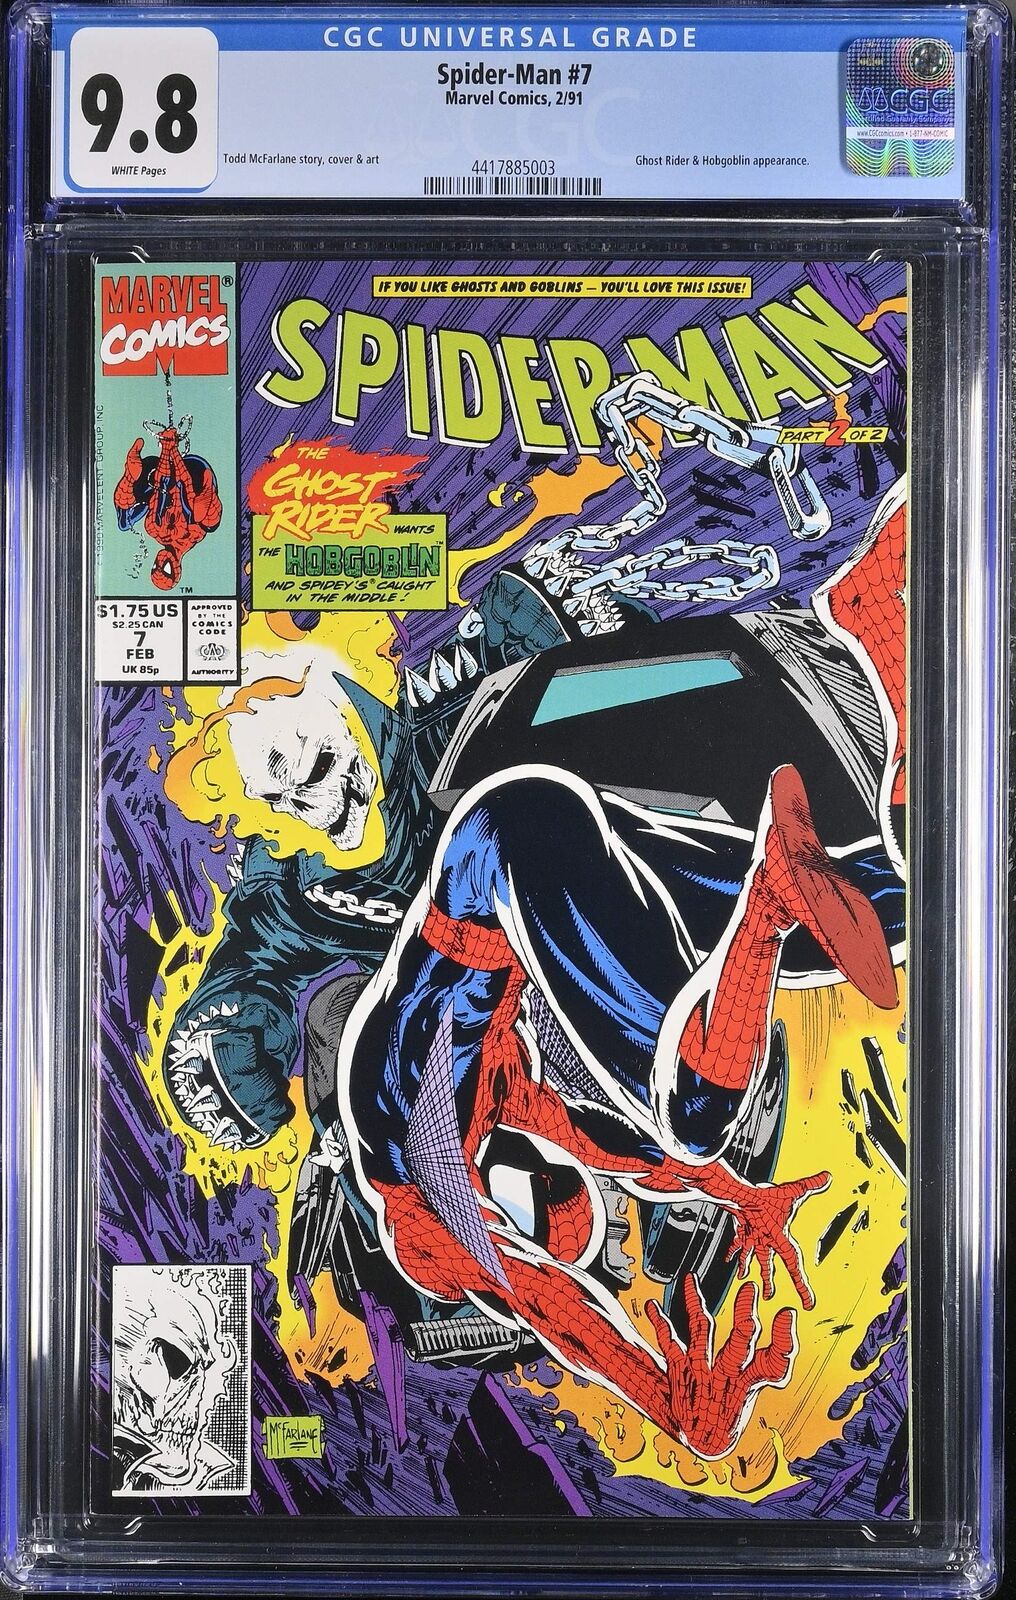 Spider-Man #7 Marvel Comics (1991) 9.8 NM/MT CGC Graded Todd McFarlane Comic